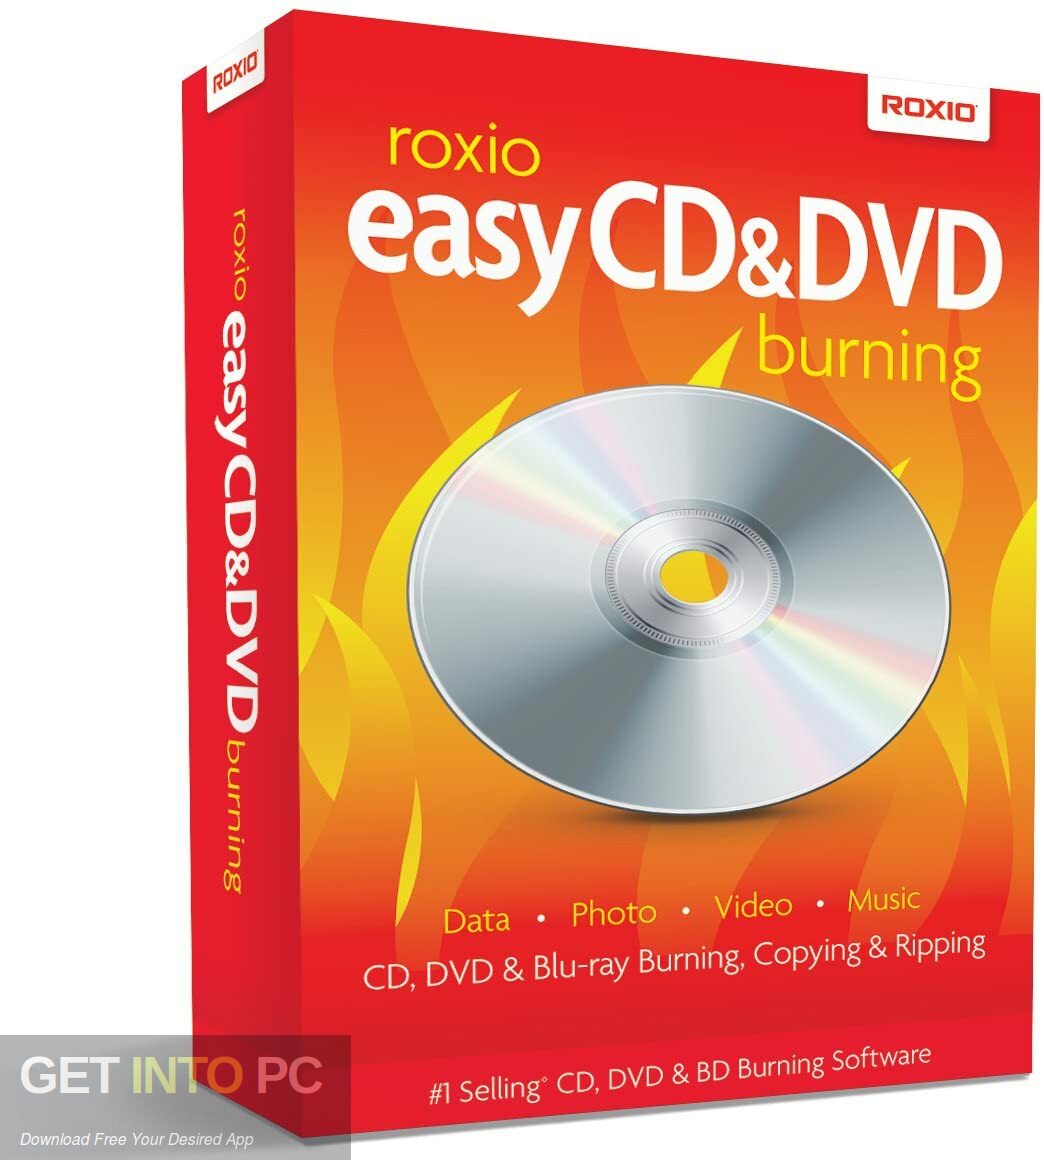 roxio dvd copy software free download windows vista 32 bit